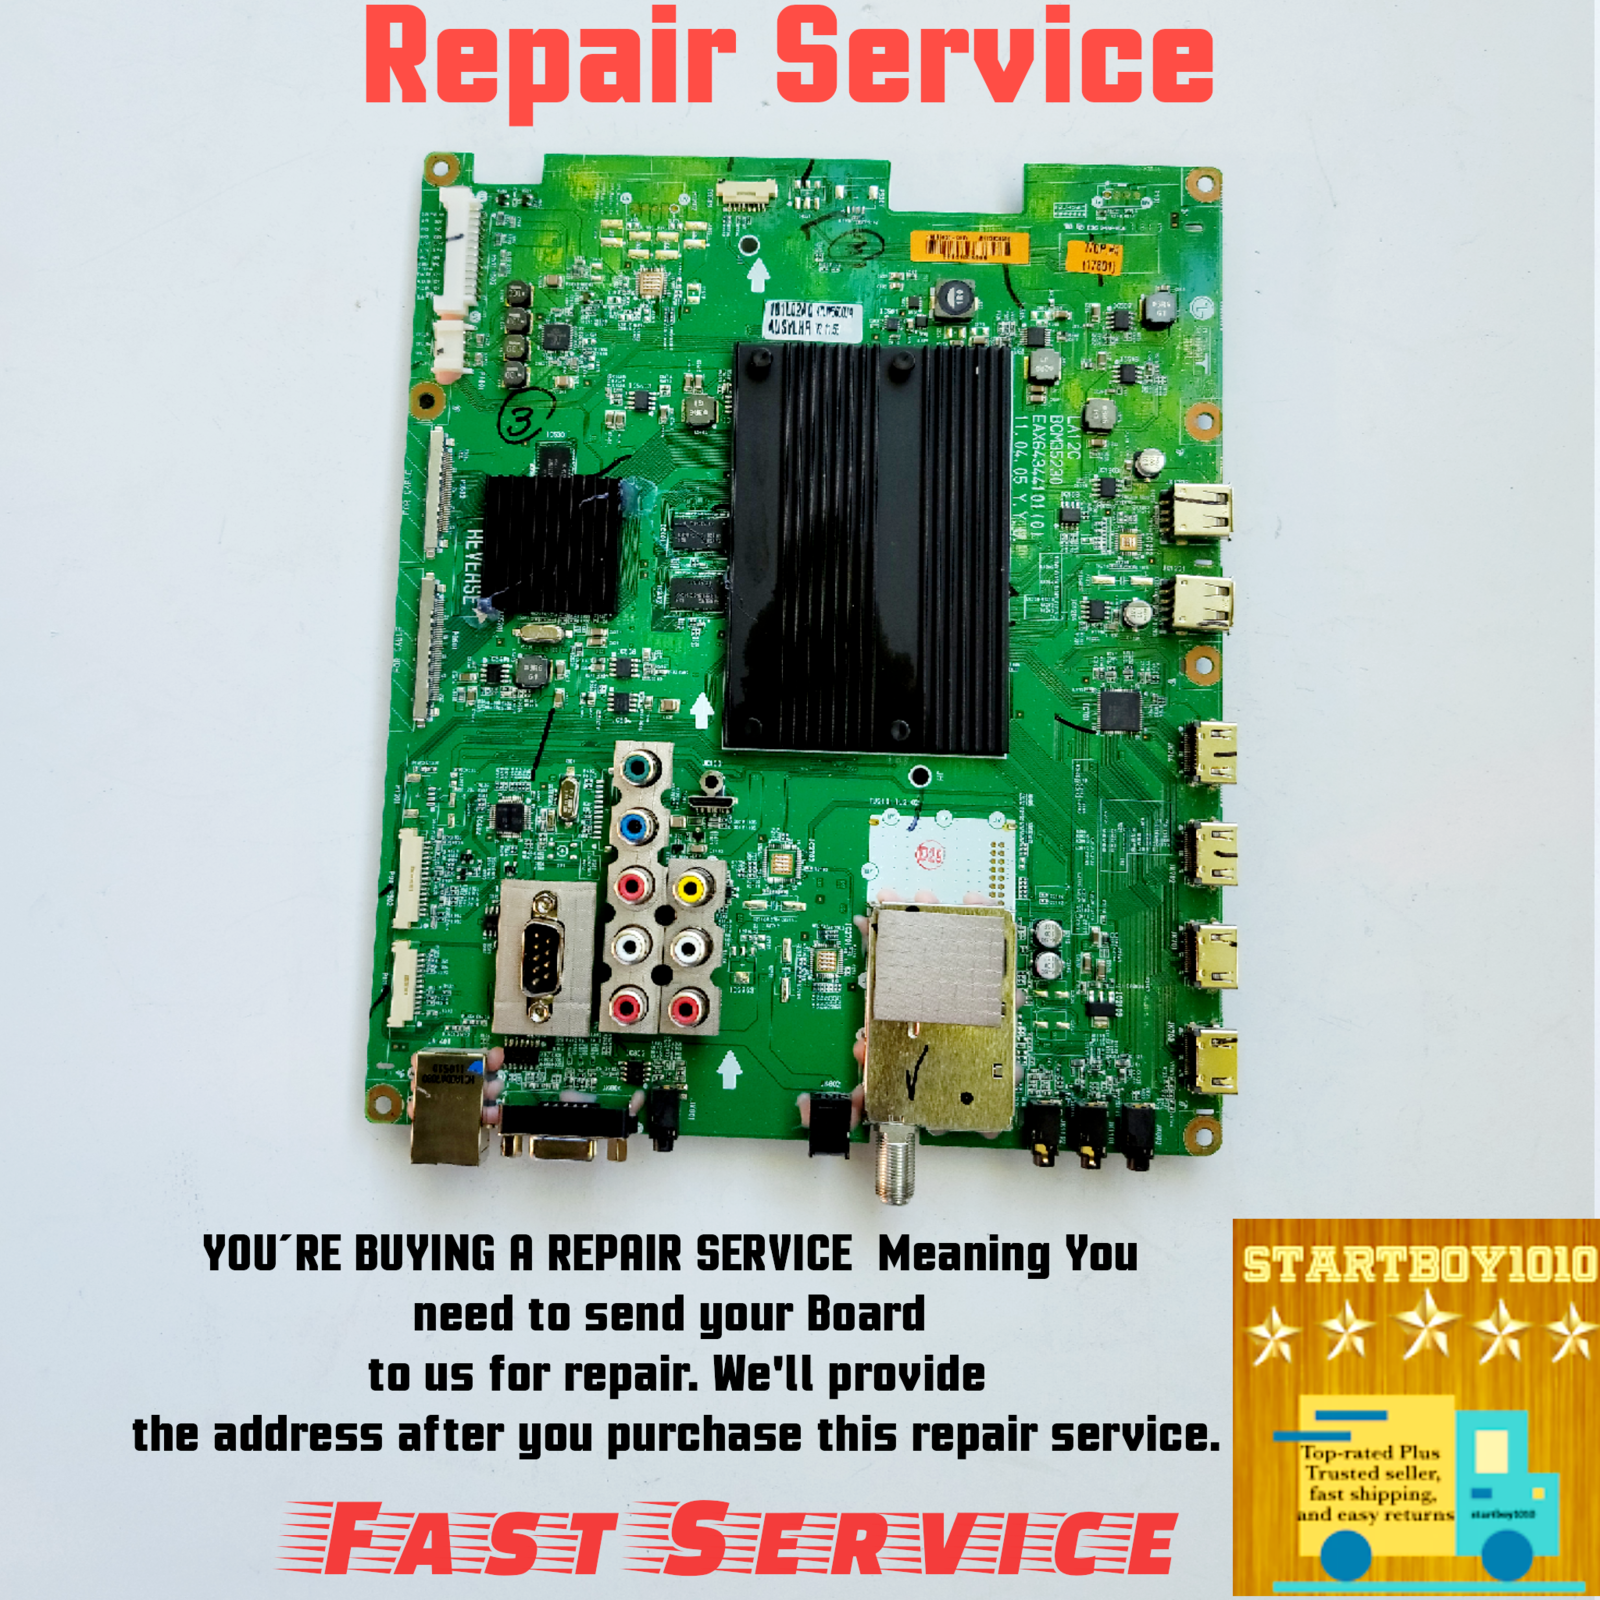 REPAIR SERVICE LG Main Board 42LV5500, 55LV5500  47LW6500 55LW5300  47LV5400 - $65.44